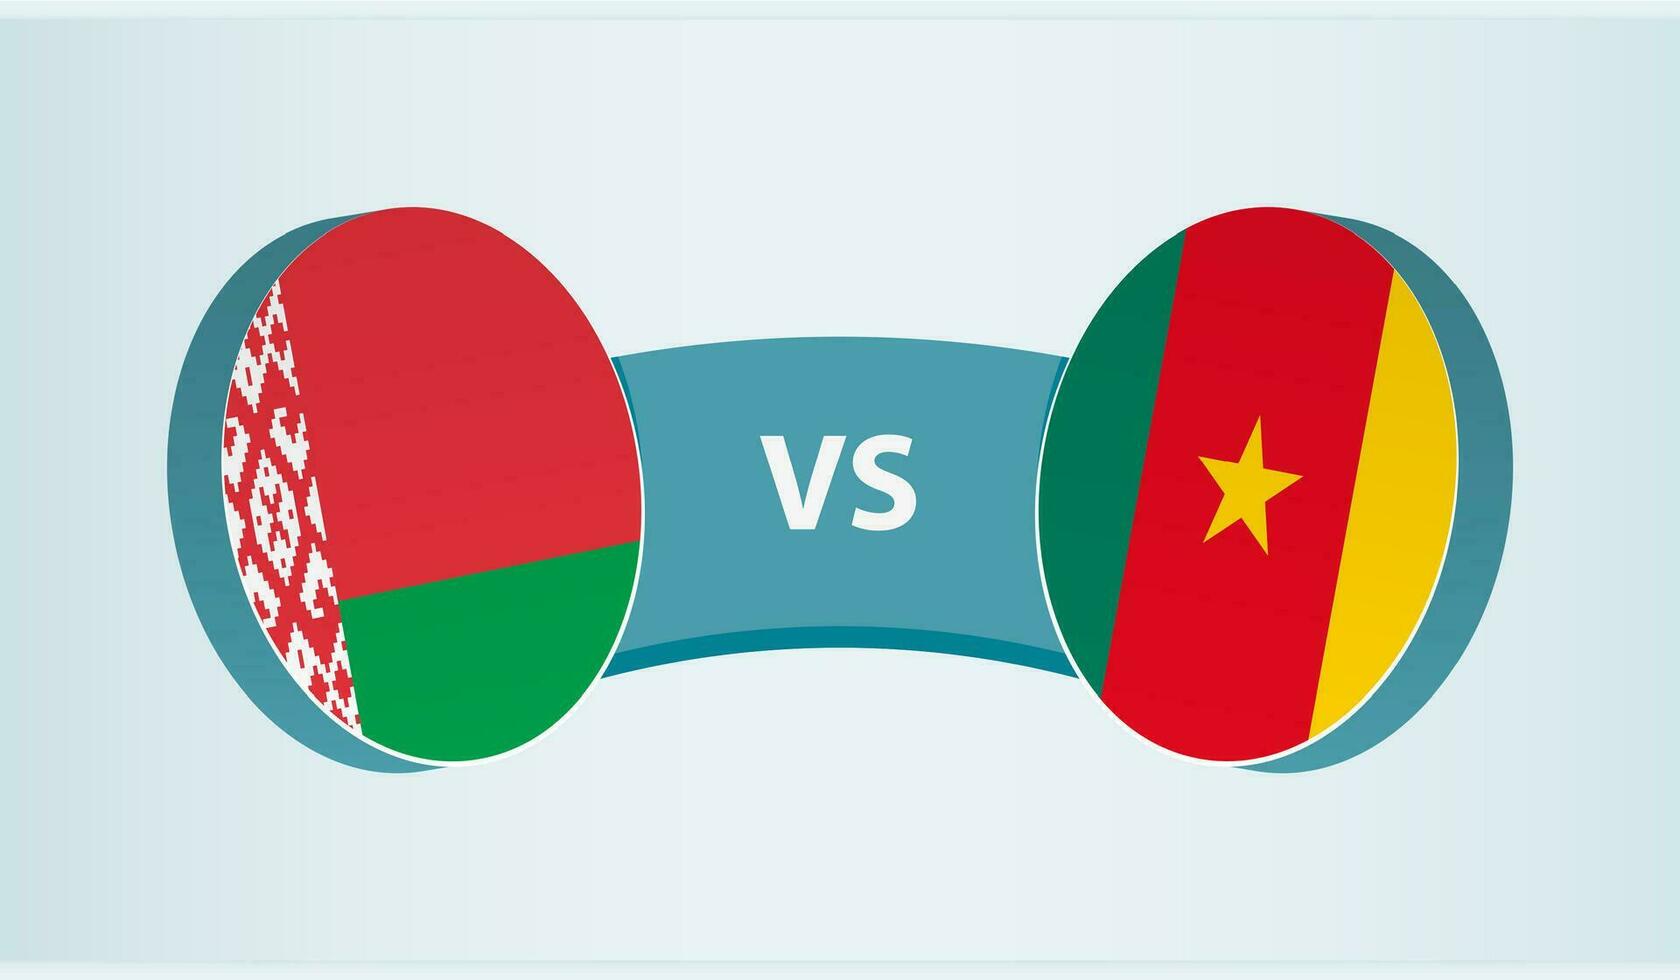 Belarus versus Cameroon, team sports competition concept. vector